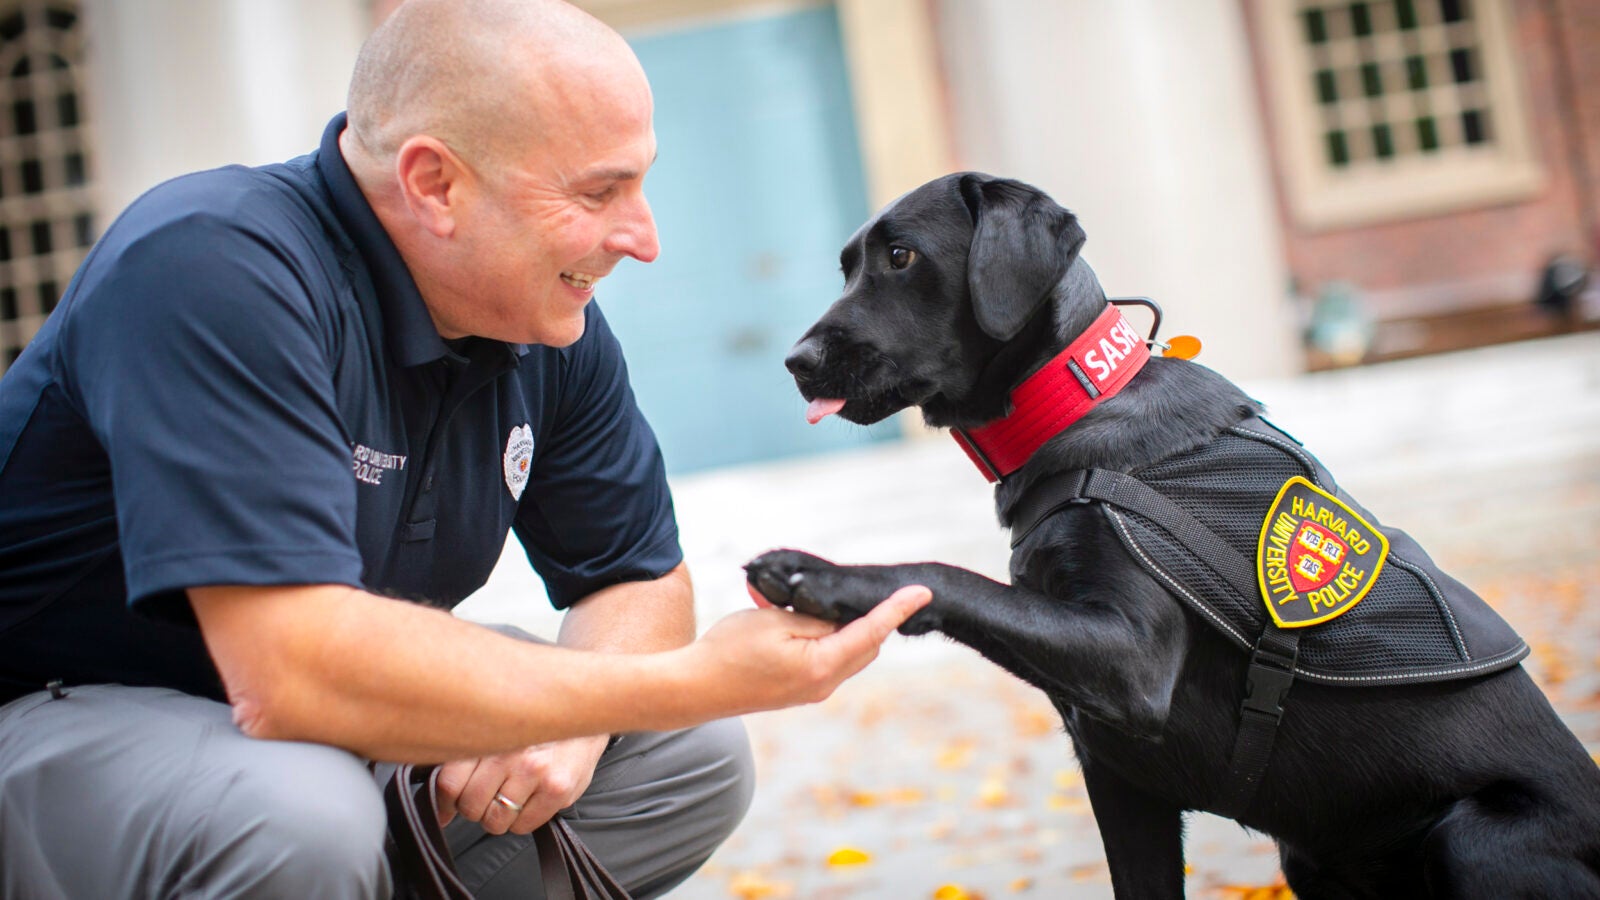 Harvard police dog patrols for smiles – Harvard Gazette